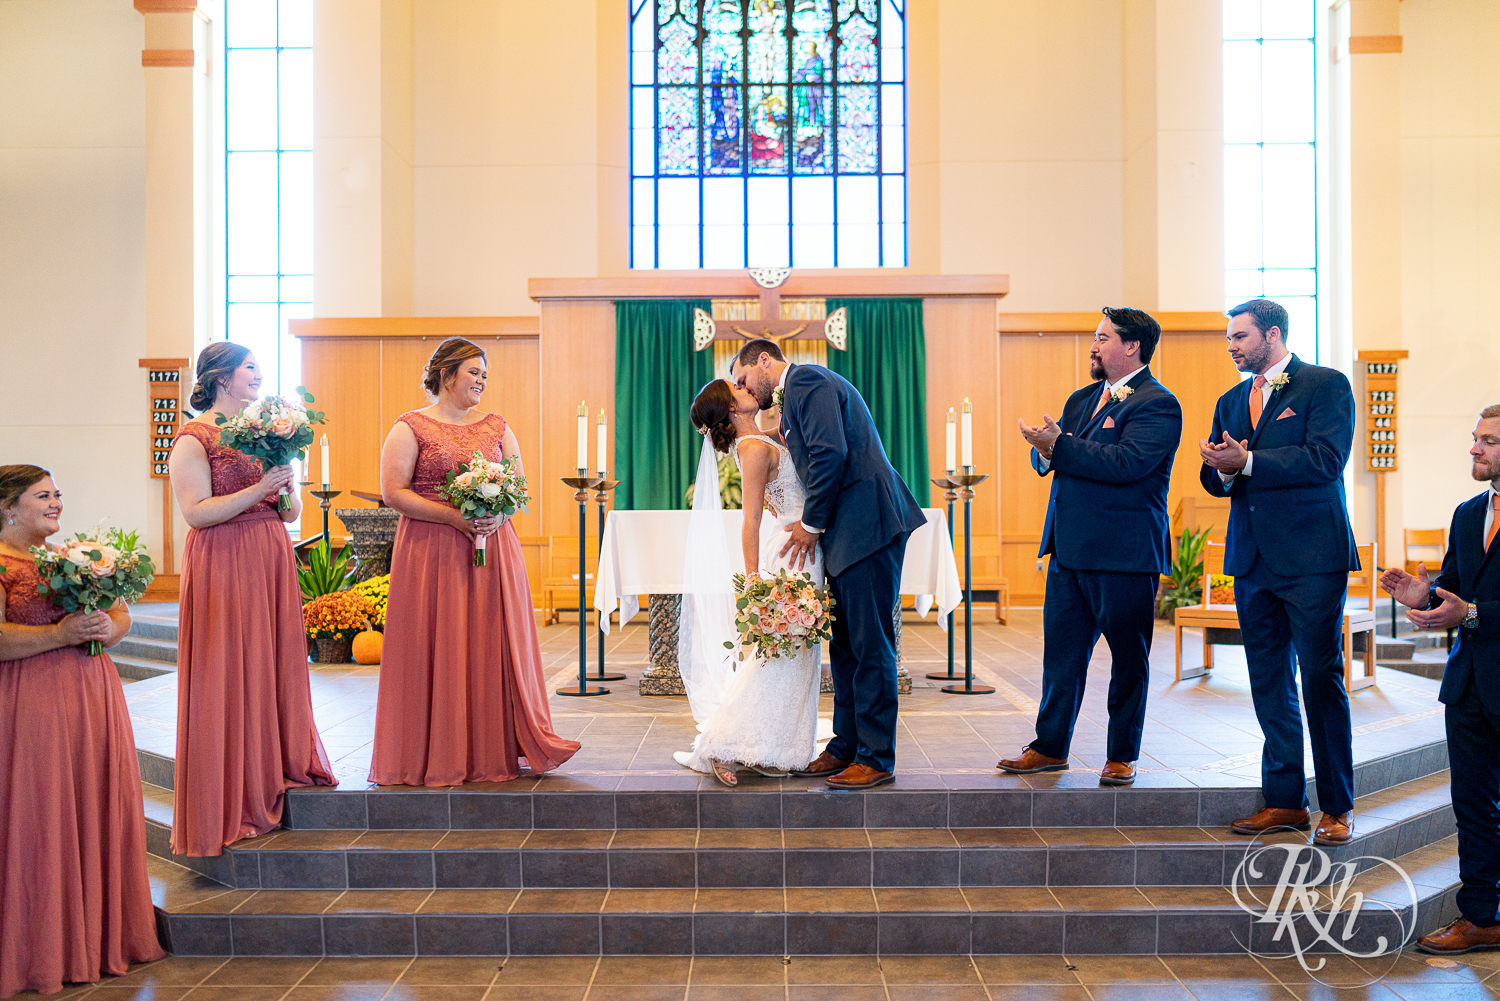 First kiss at Catholic wedding ceremony at Saint Joseph Catholic Church in Rosemount, Minnesota.